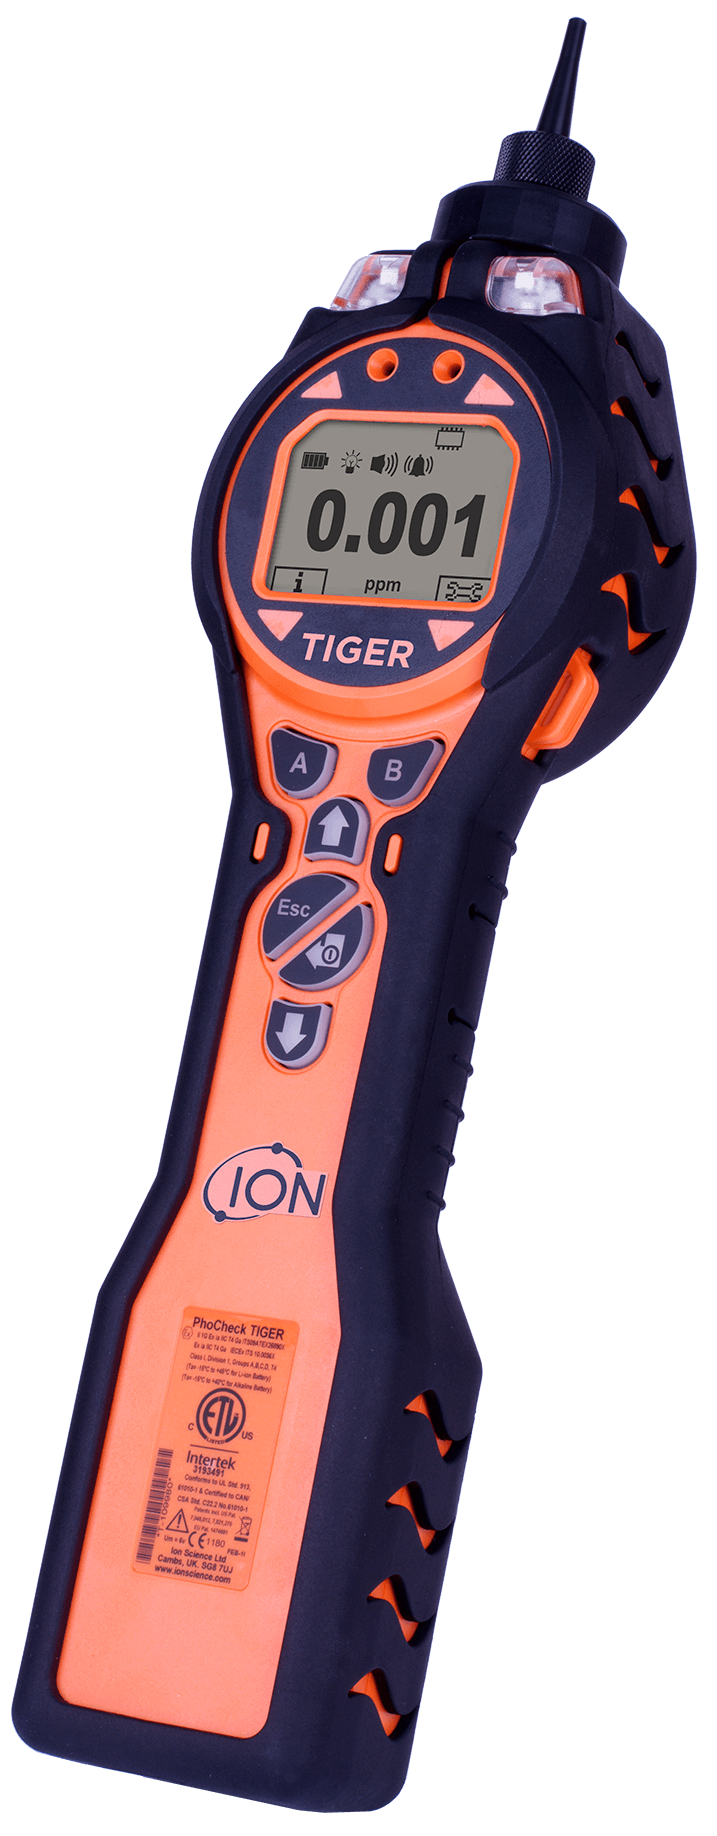 Tiger-VOC-detector-overview-33-reduced.png